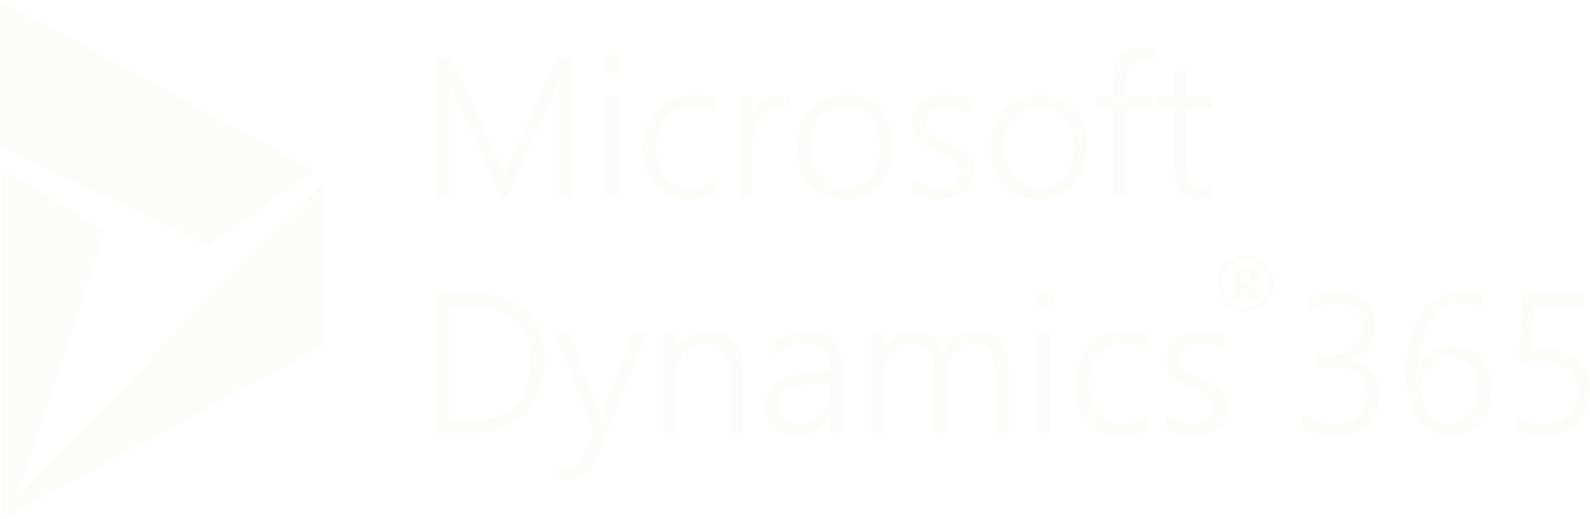 Dynamics 365 logo 1